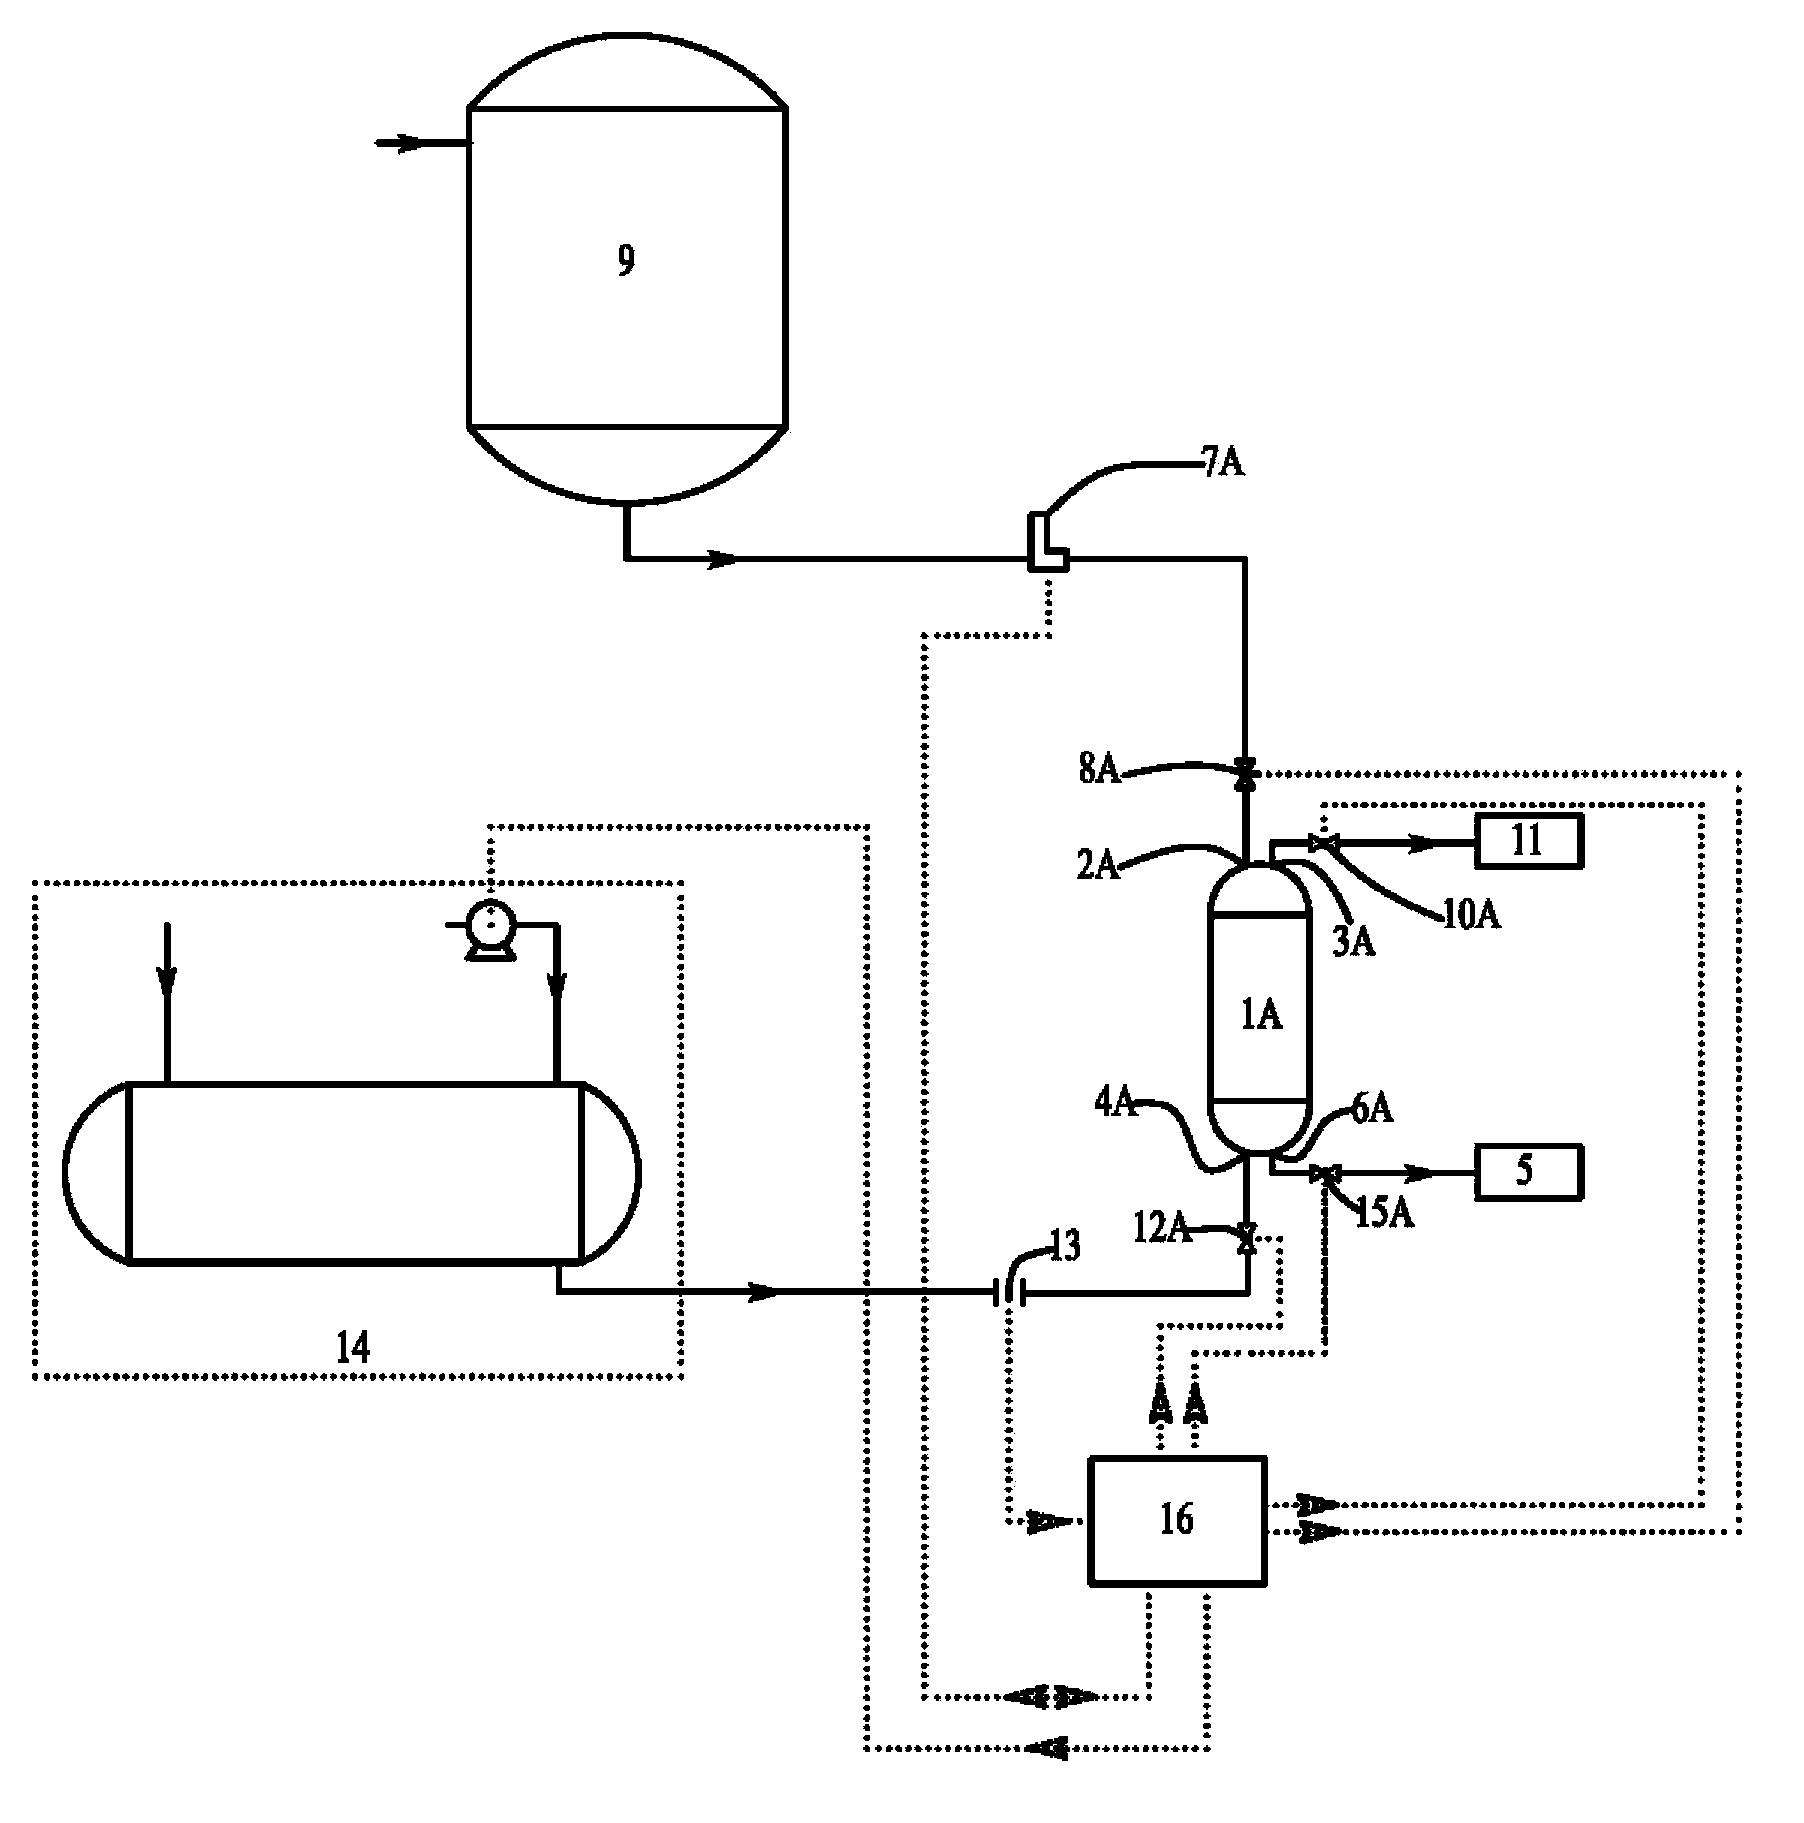 Liquid bromine metering device